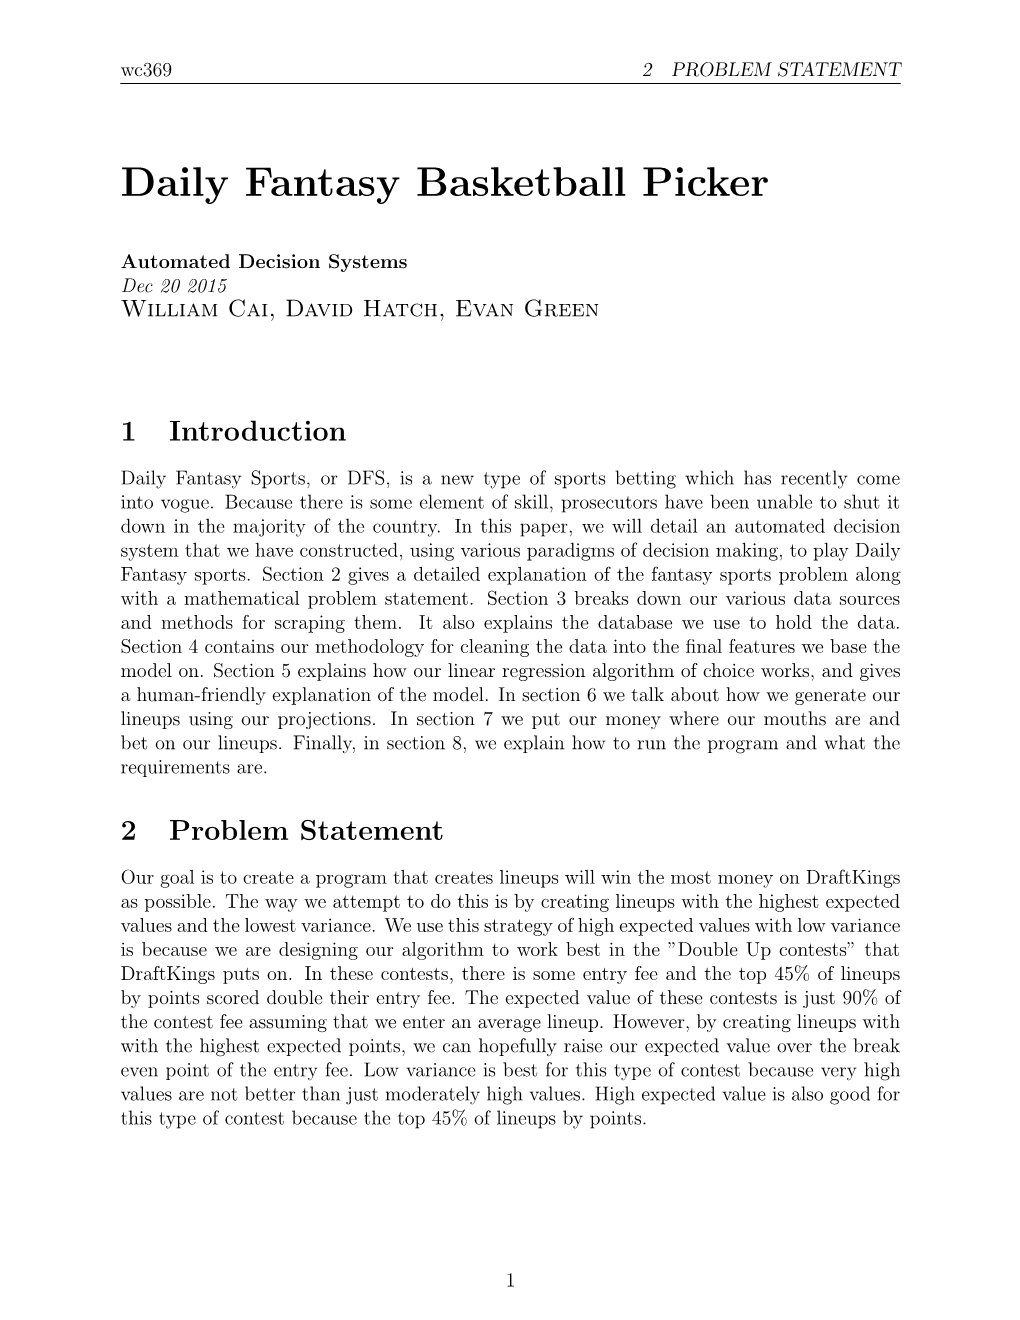 Daily Fantasy Basketball Picker